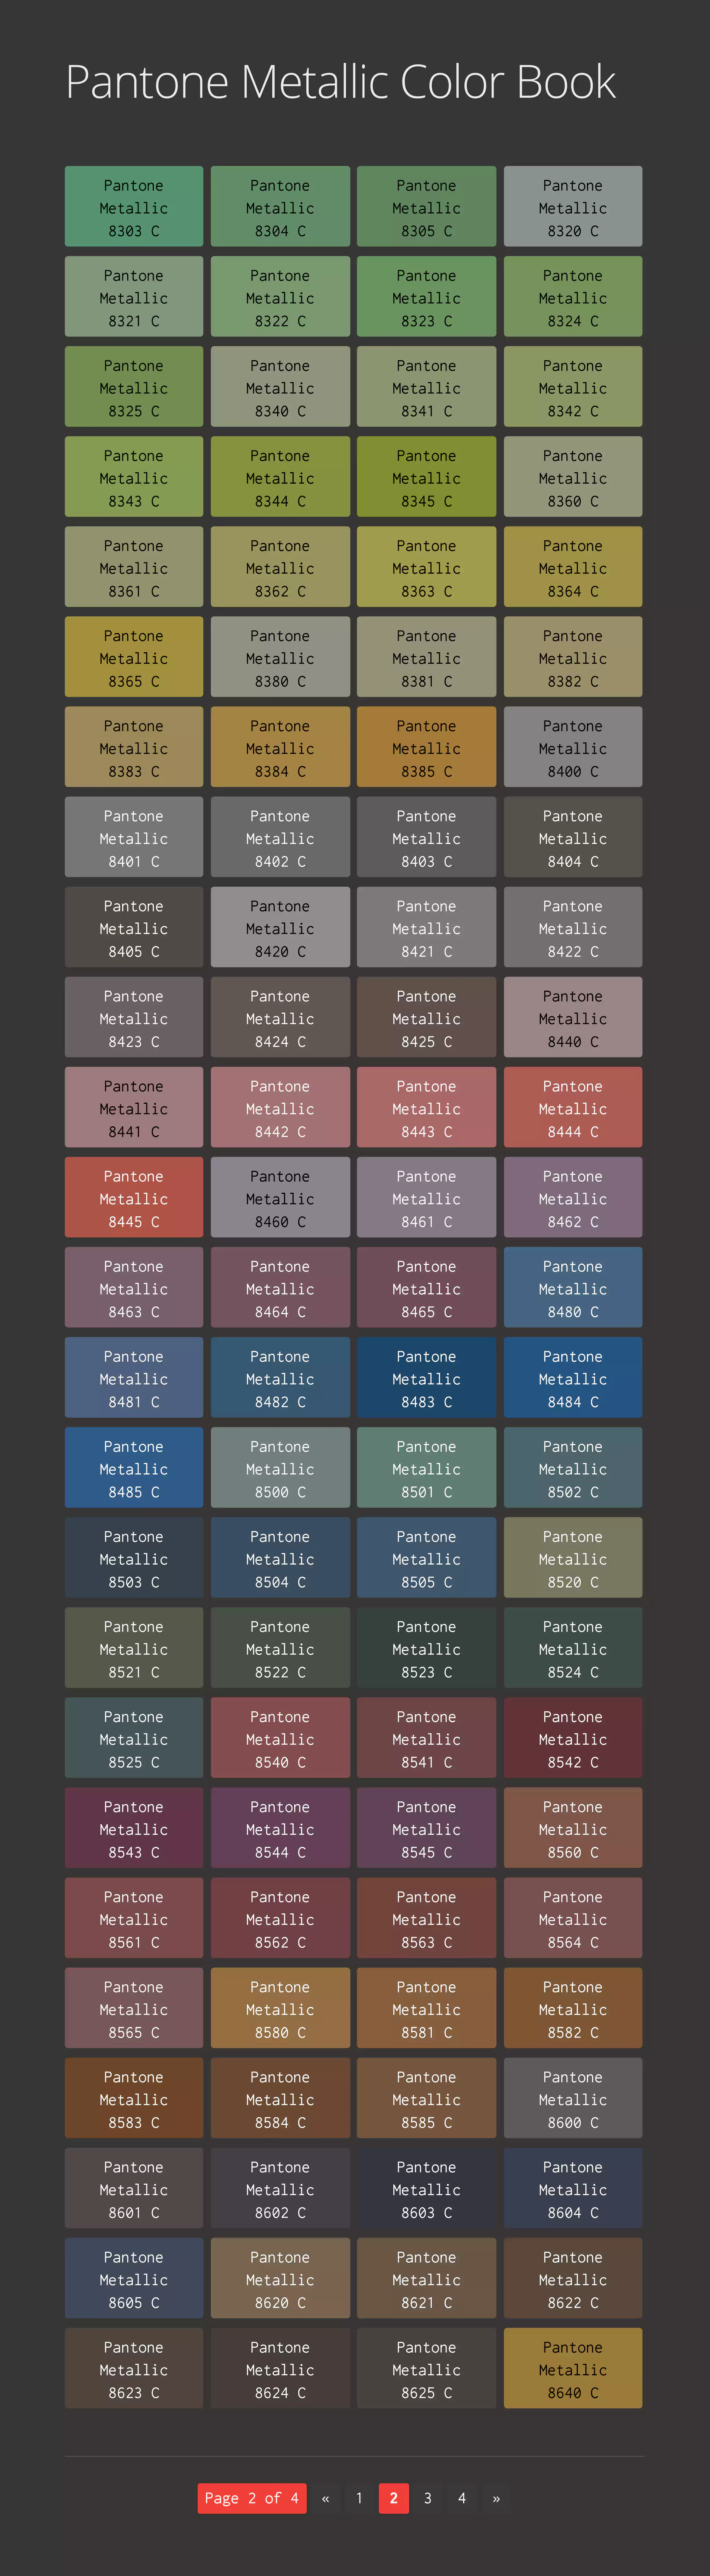 Pantone-Metallic-Color-Chart-2